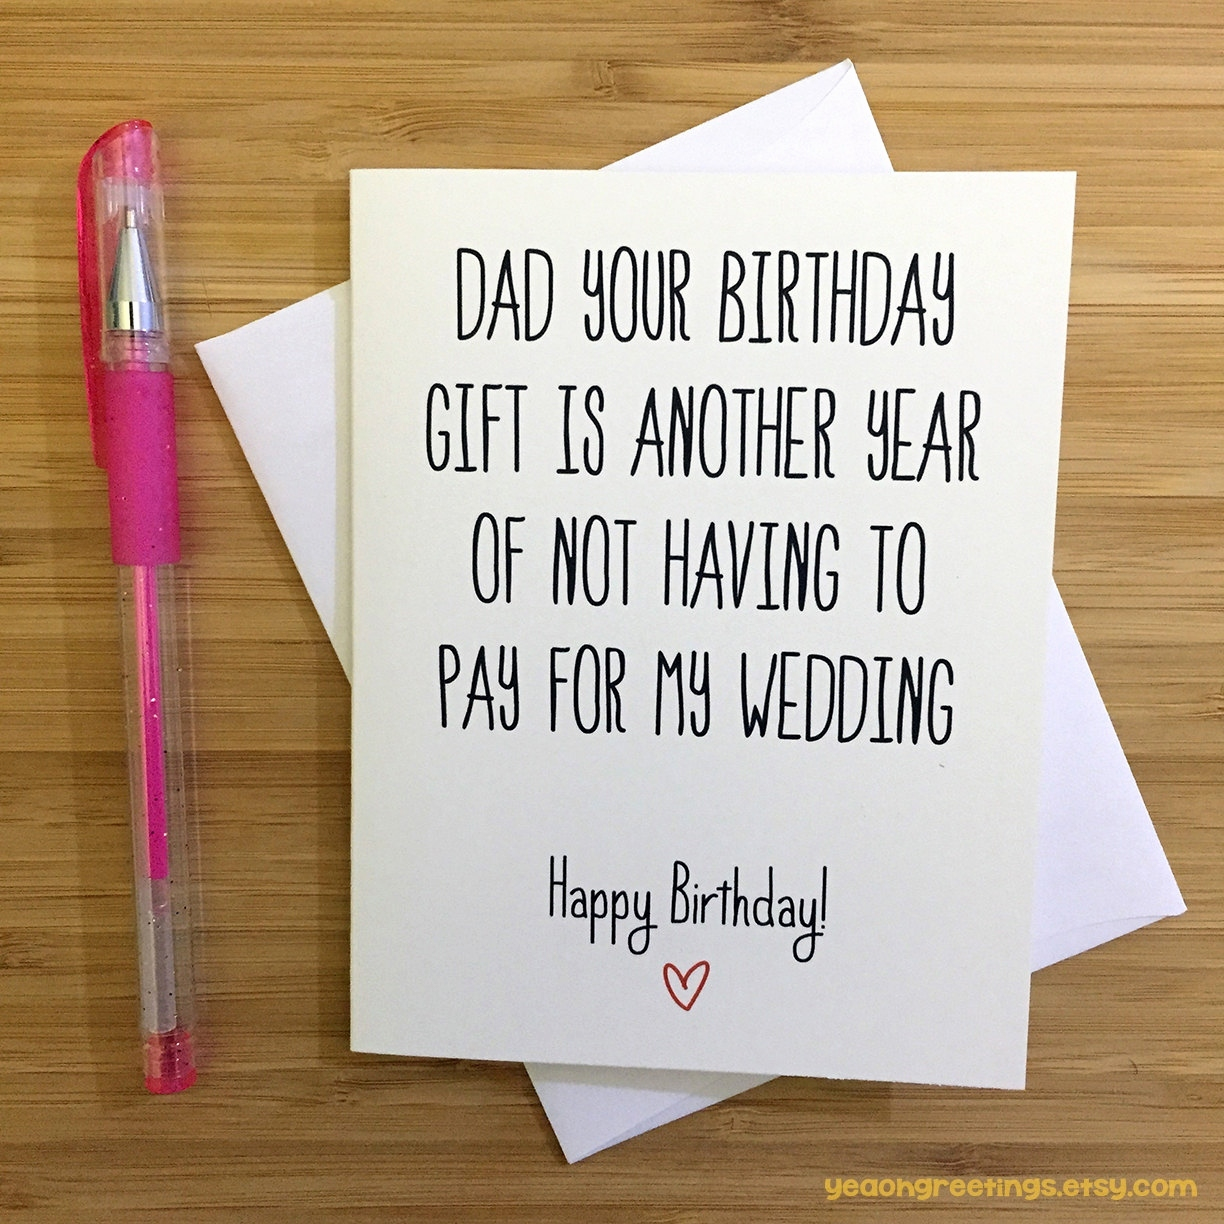 Homemade Birthday Card Ideas For Dad 99 Homemade Birthday Cards For Dad From Daughter Birthday Cards